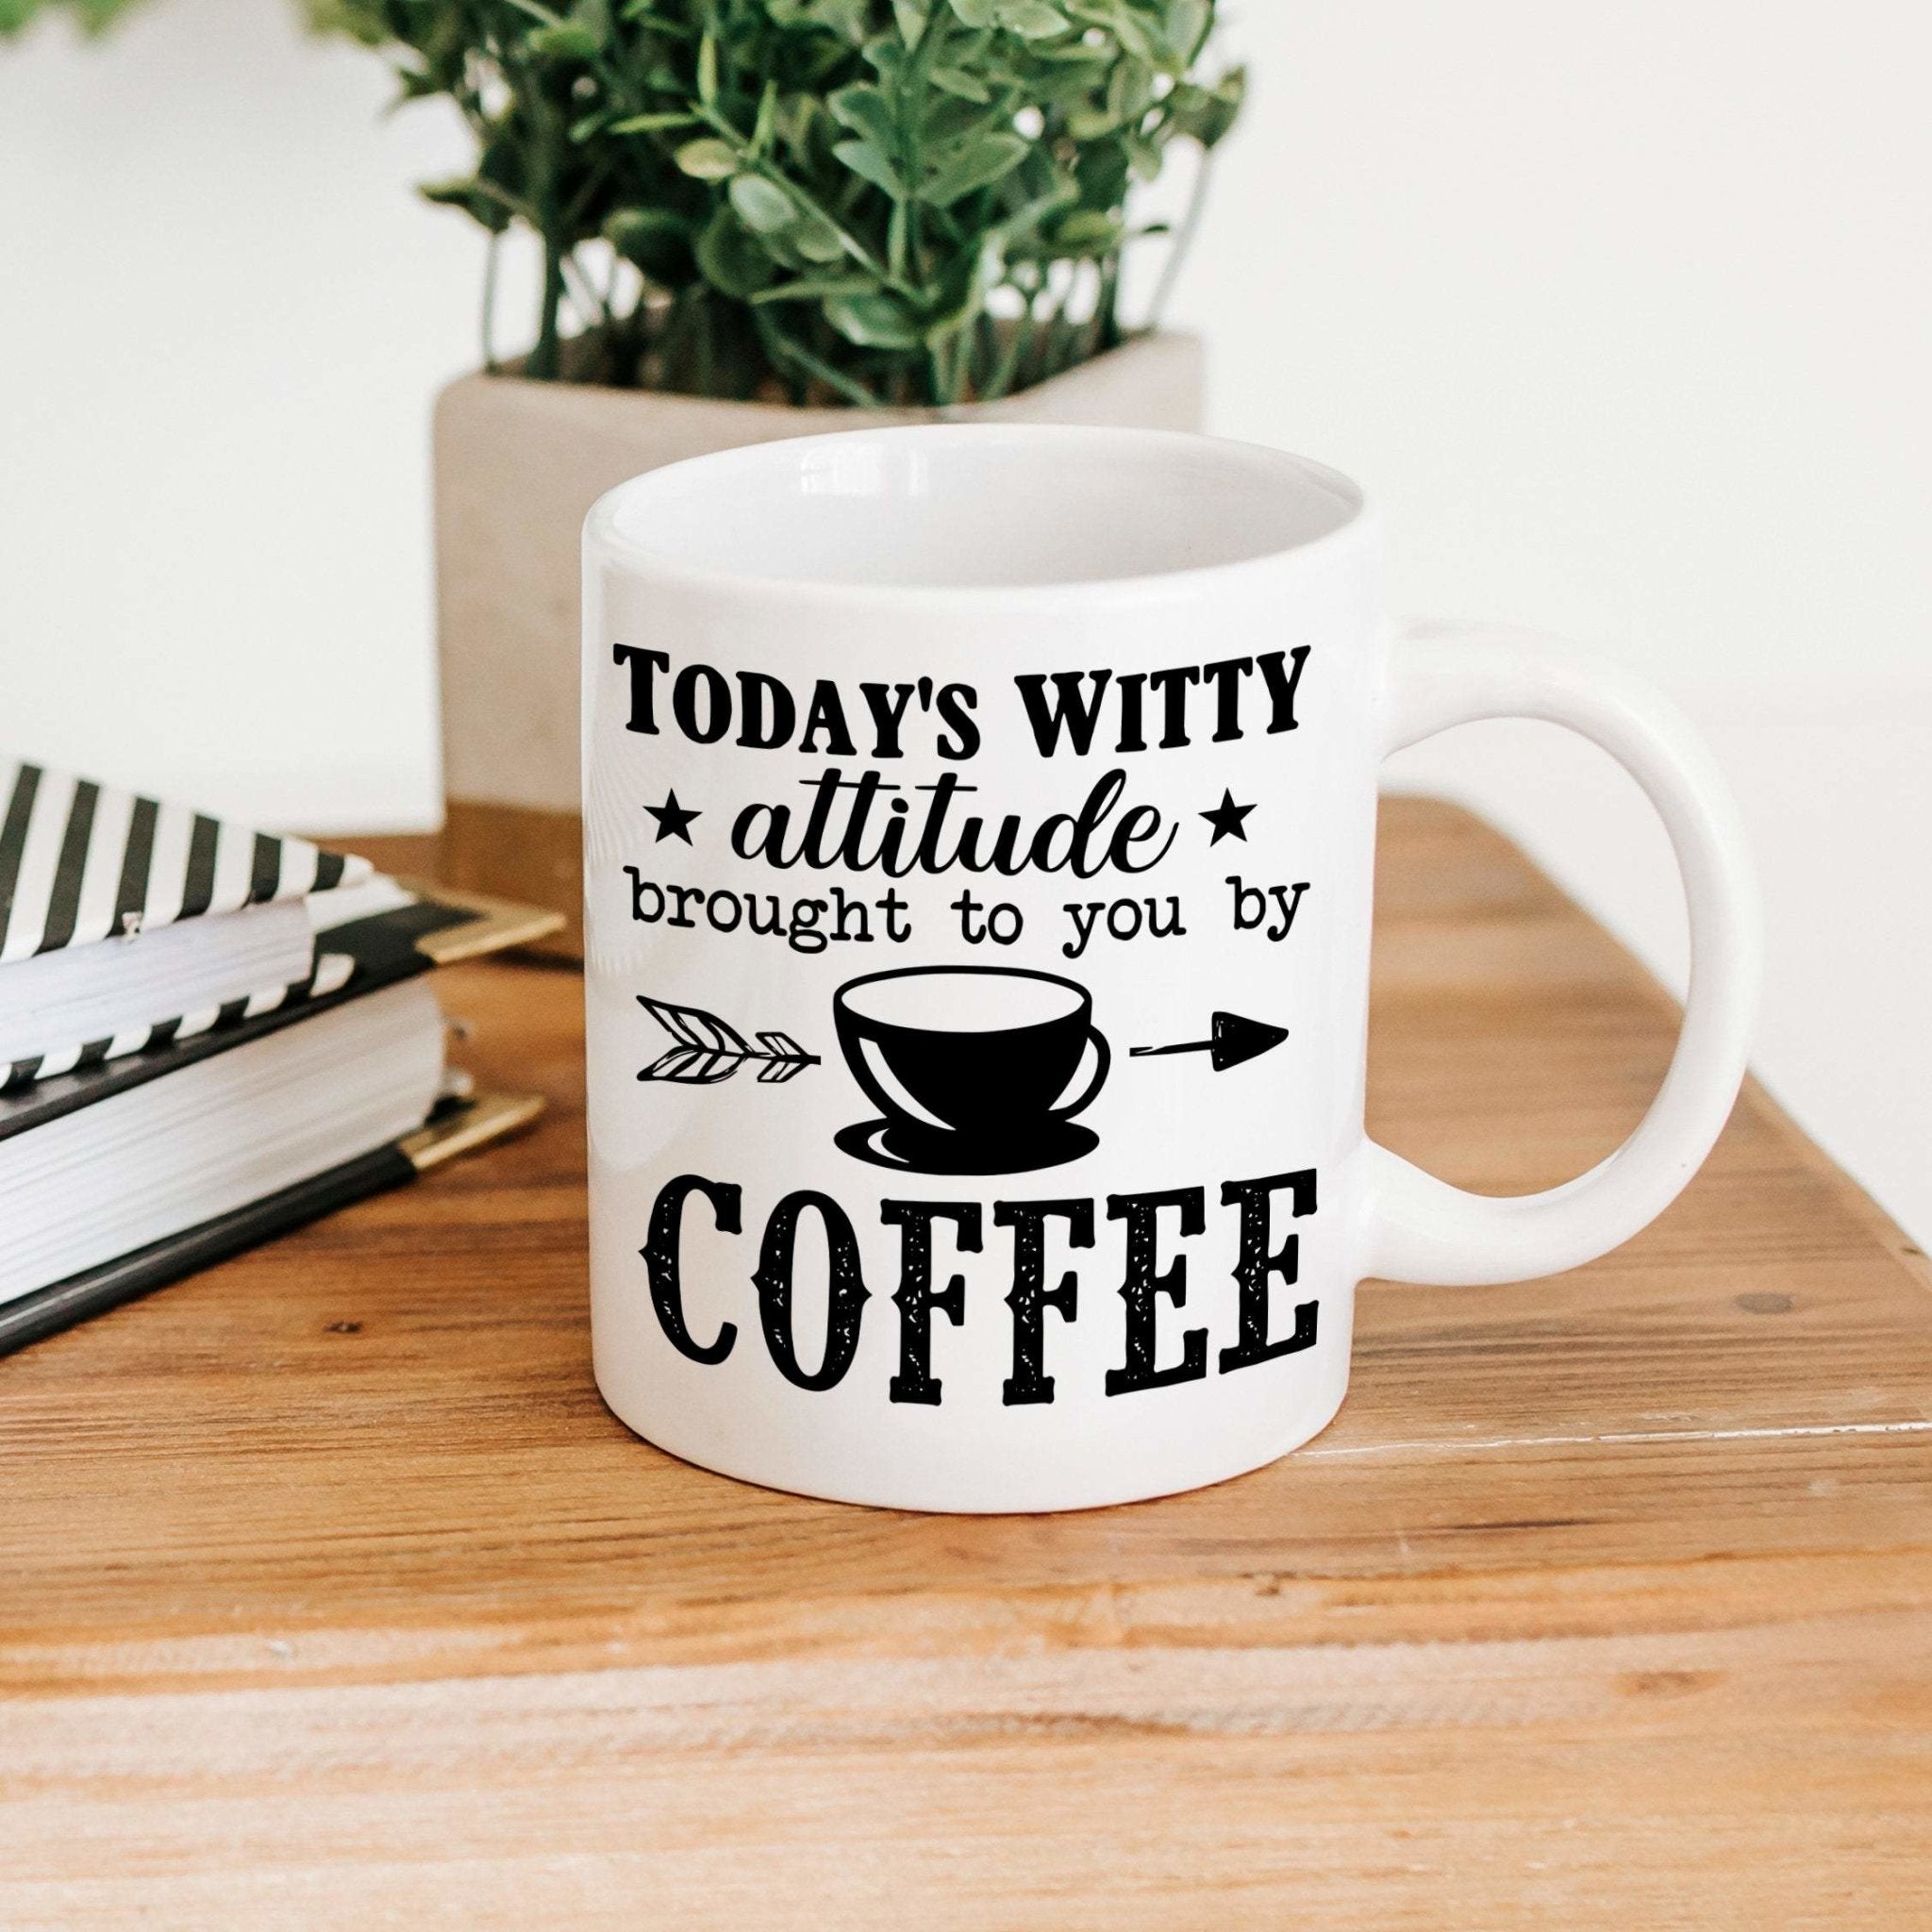 Funny quote travel coffee mug for men's Birthday